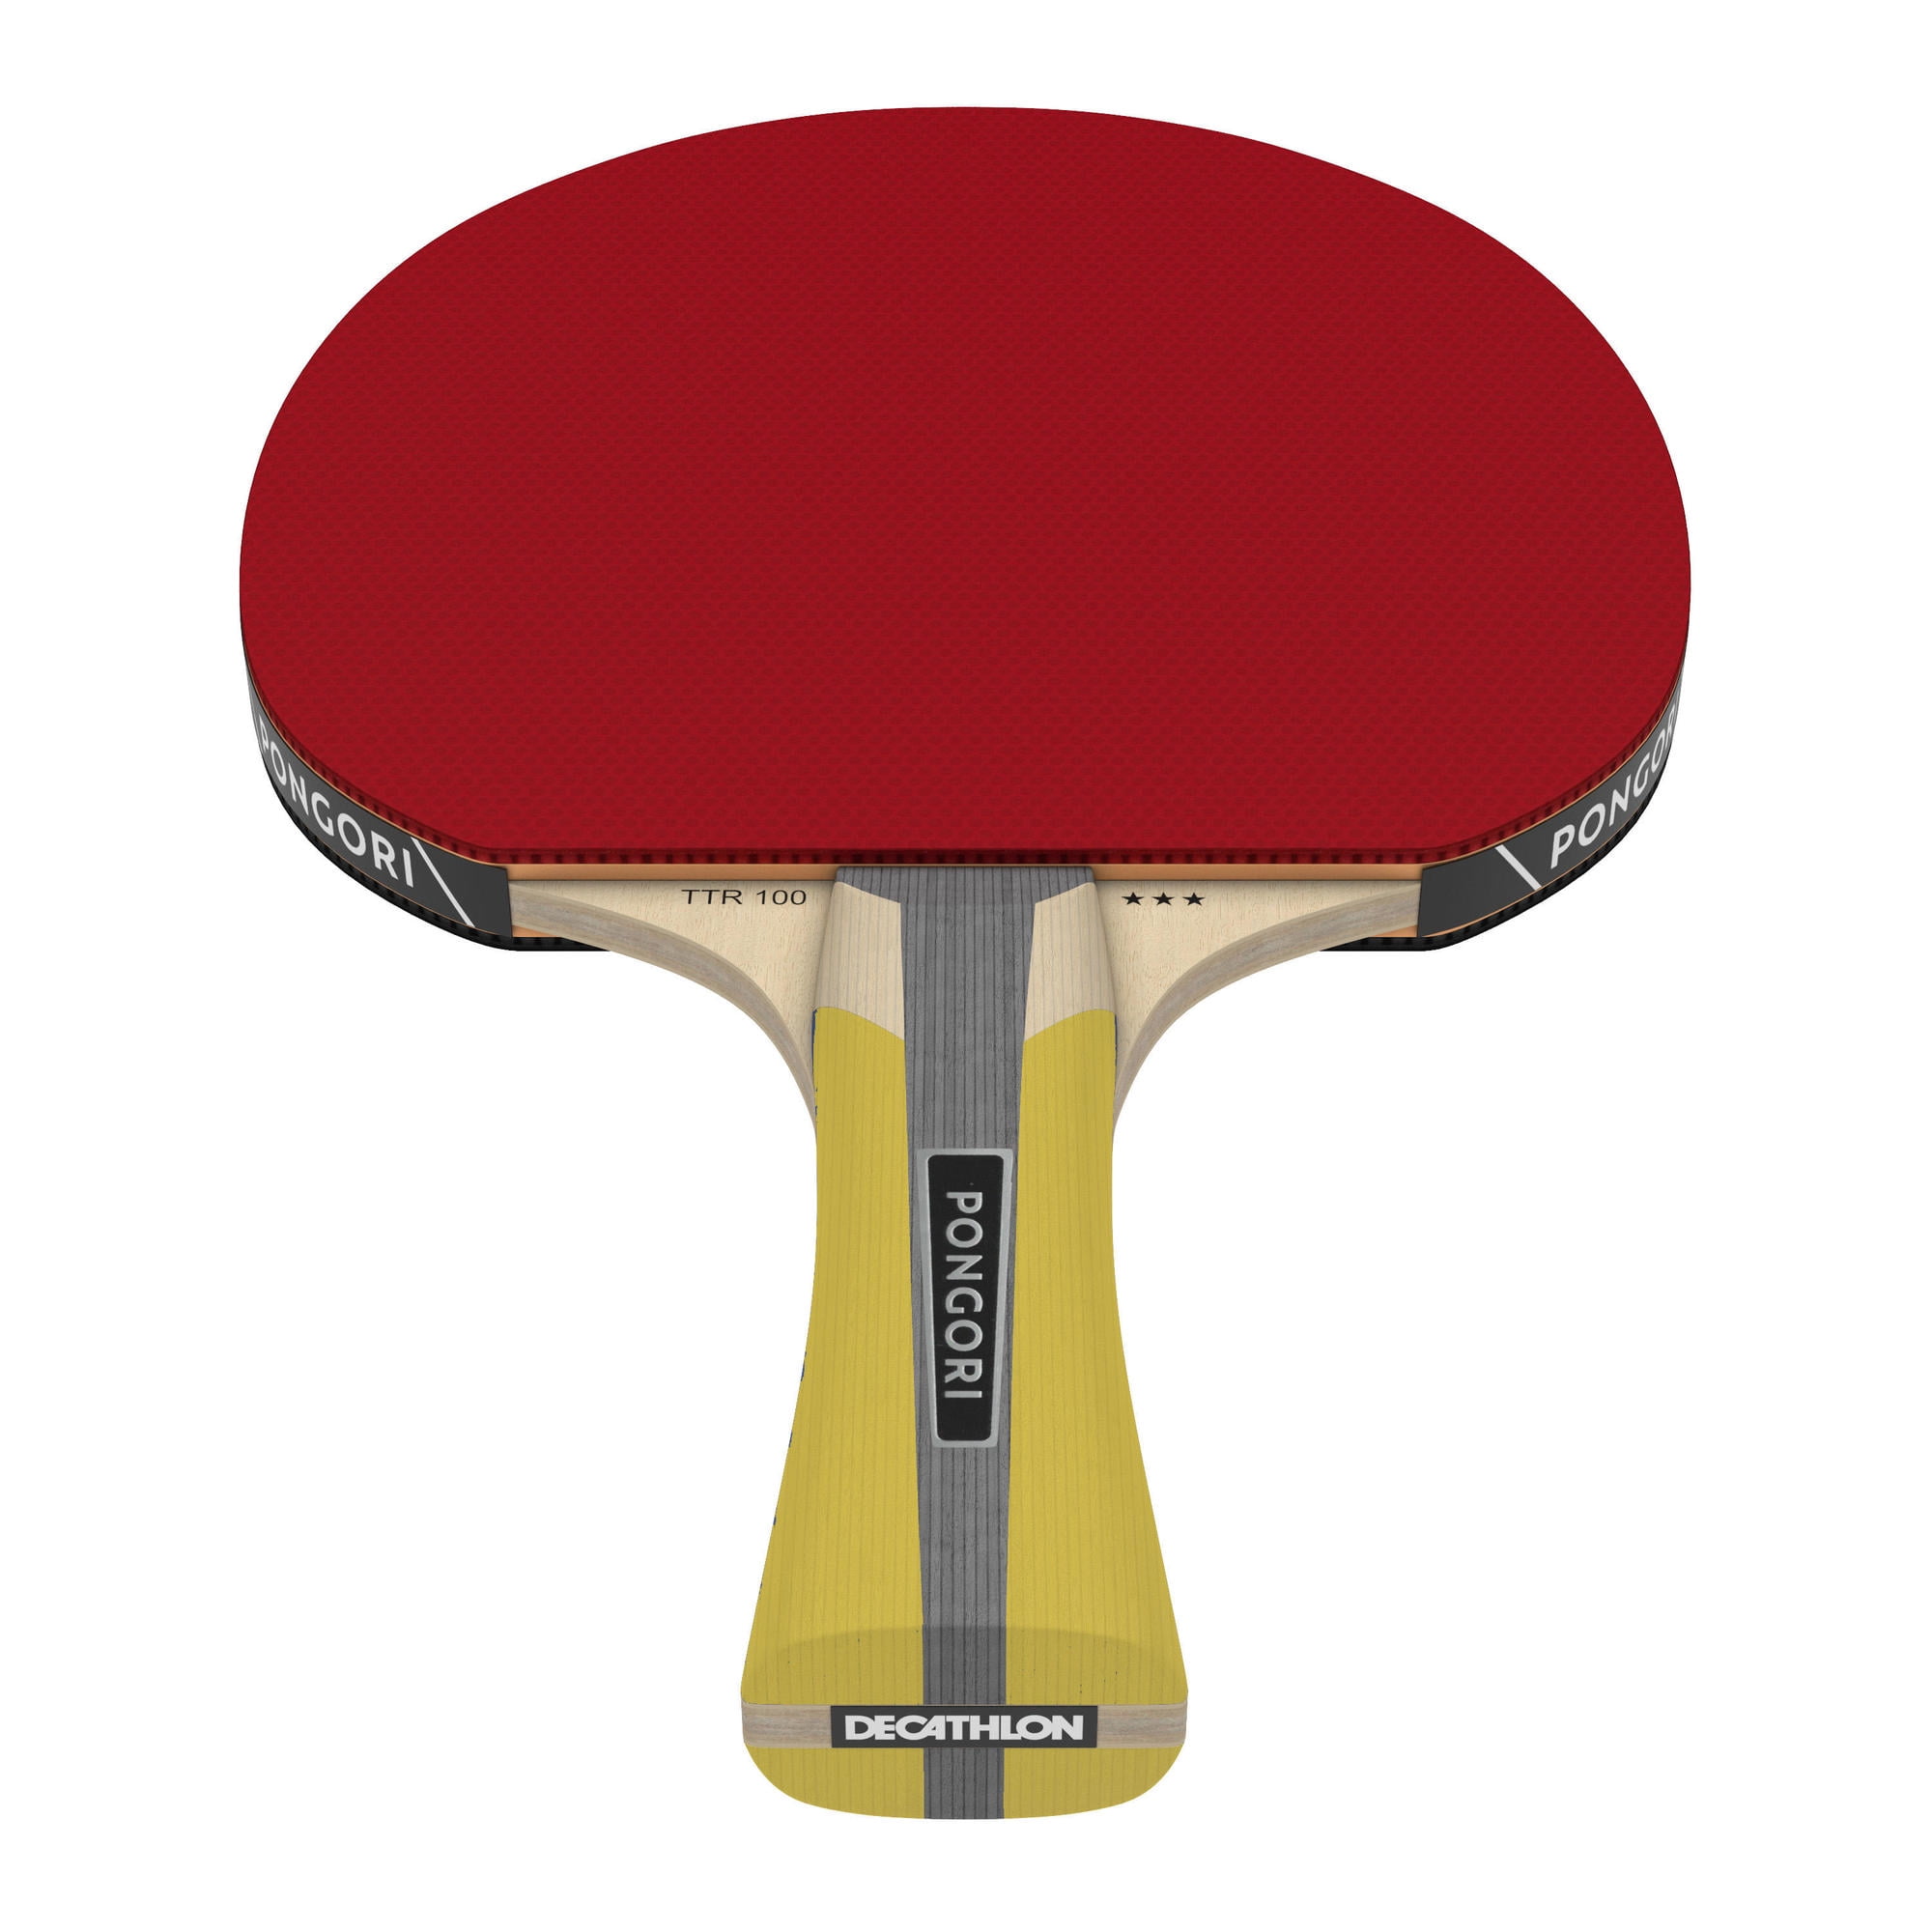 pongori table tennis